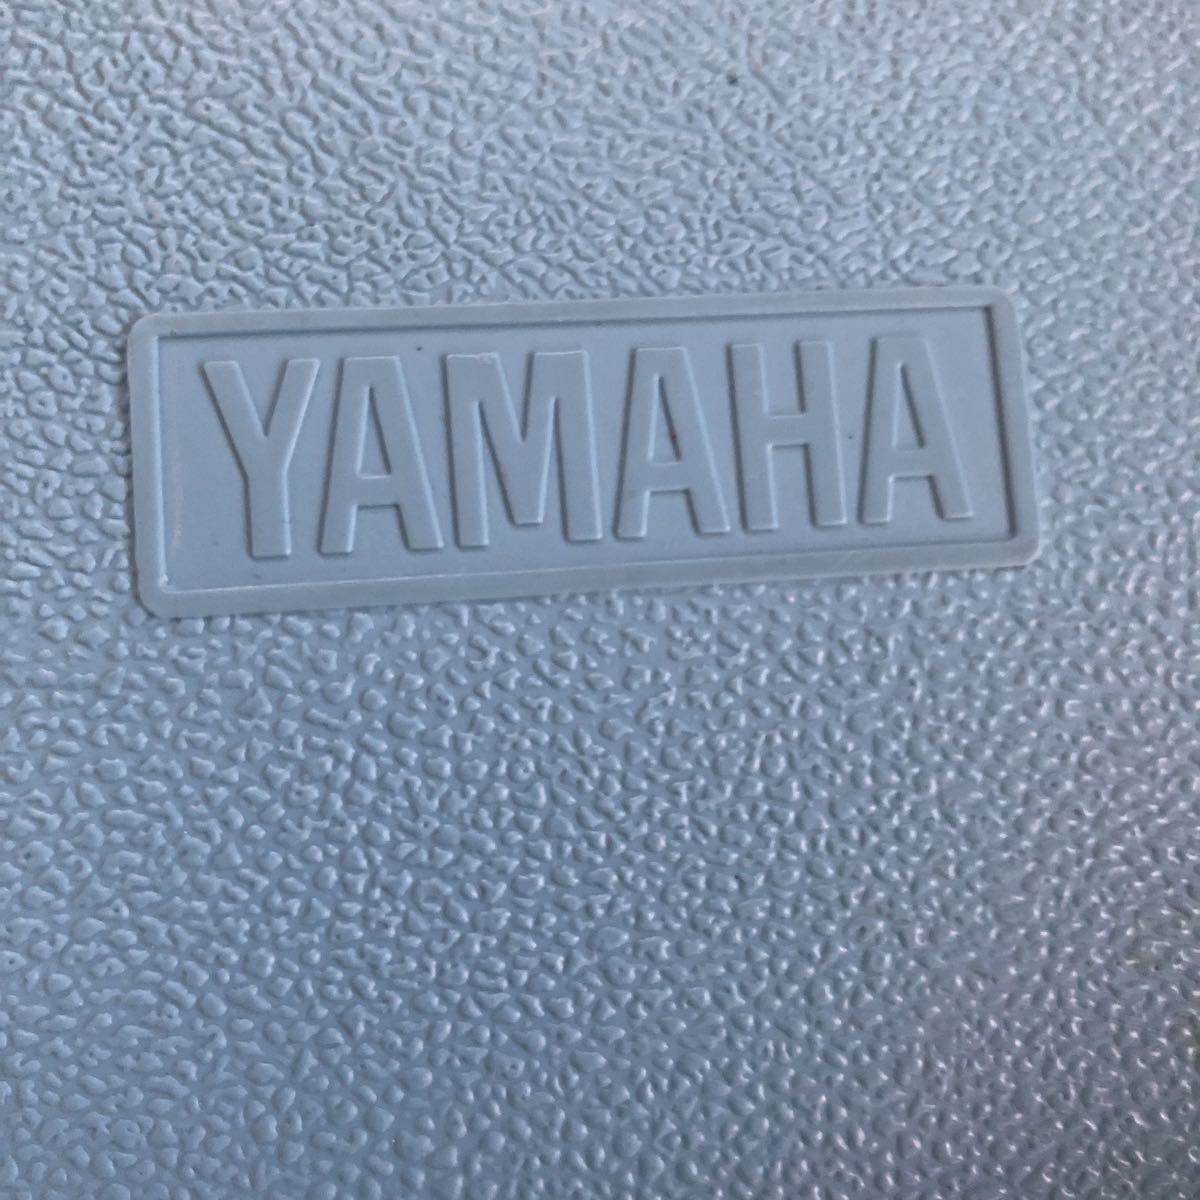  Yamaha мелодика превосходный товар мелодия on Piaa nikaYAMAHA